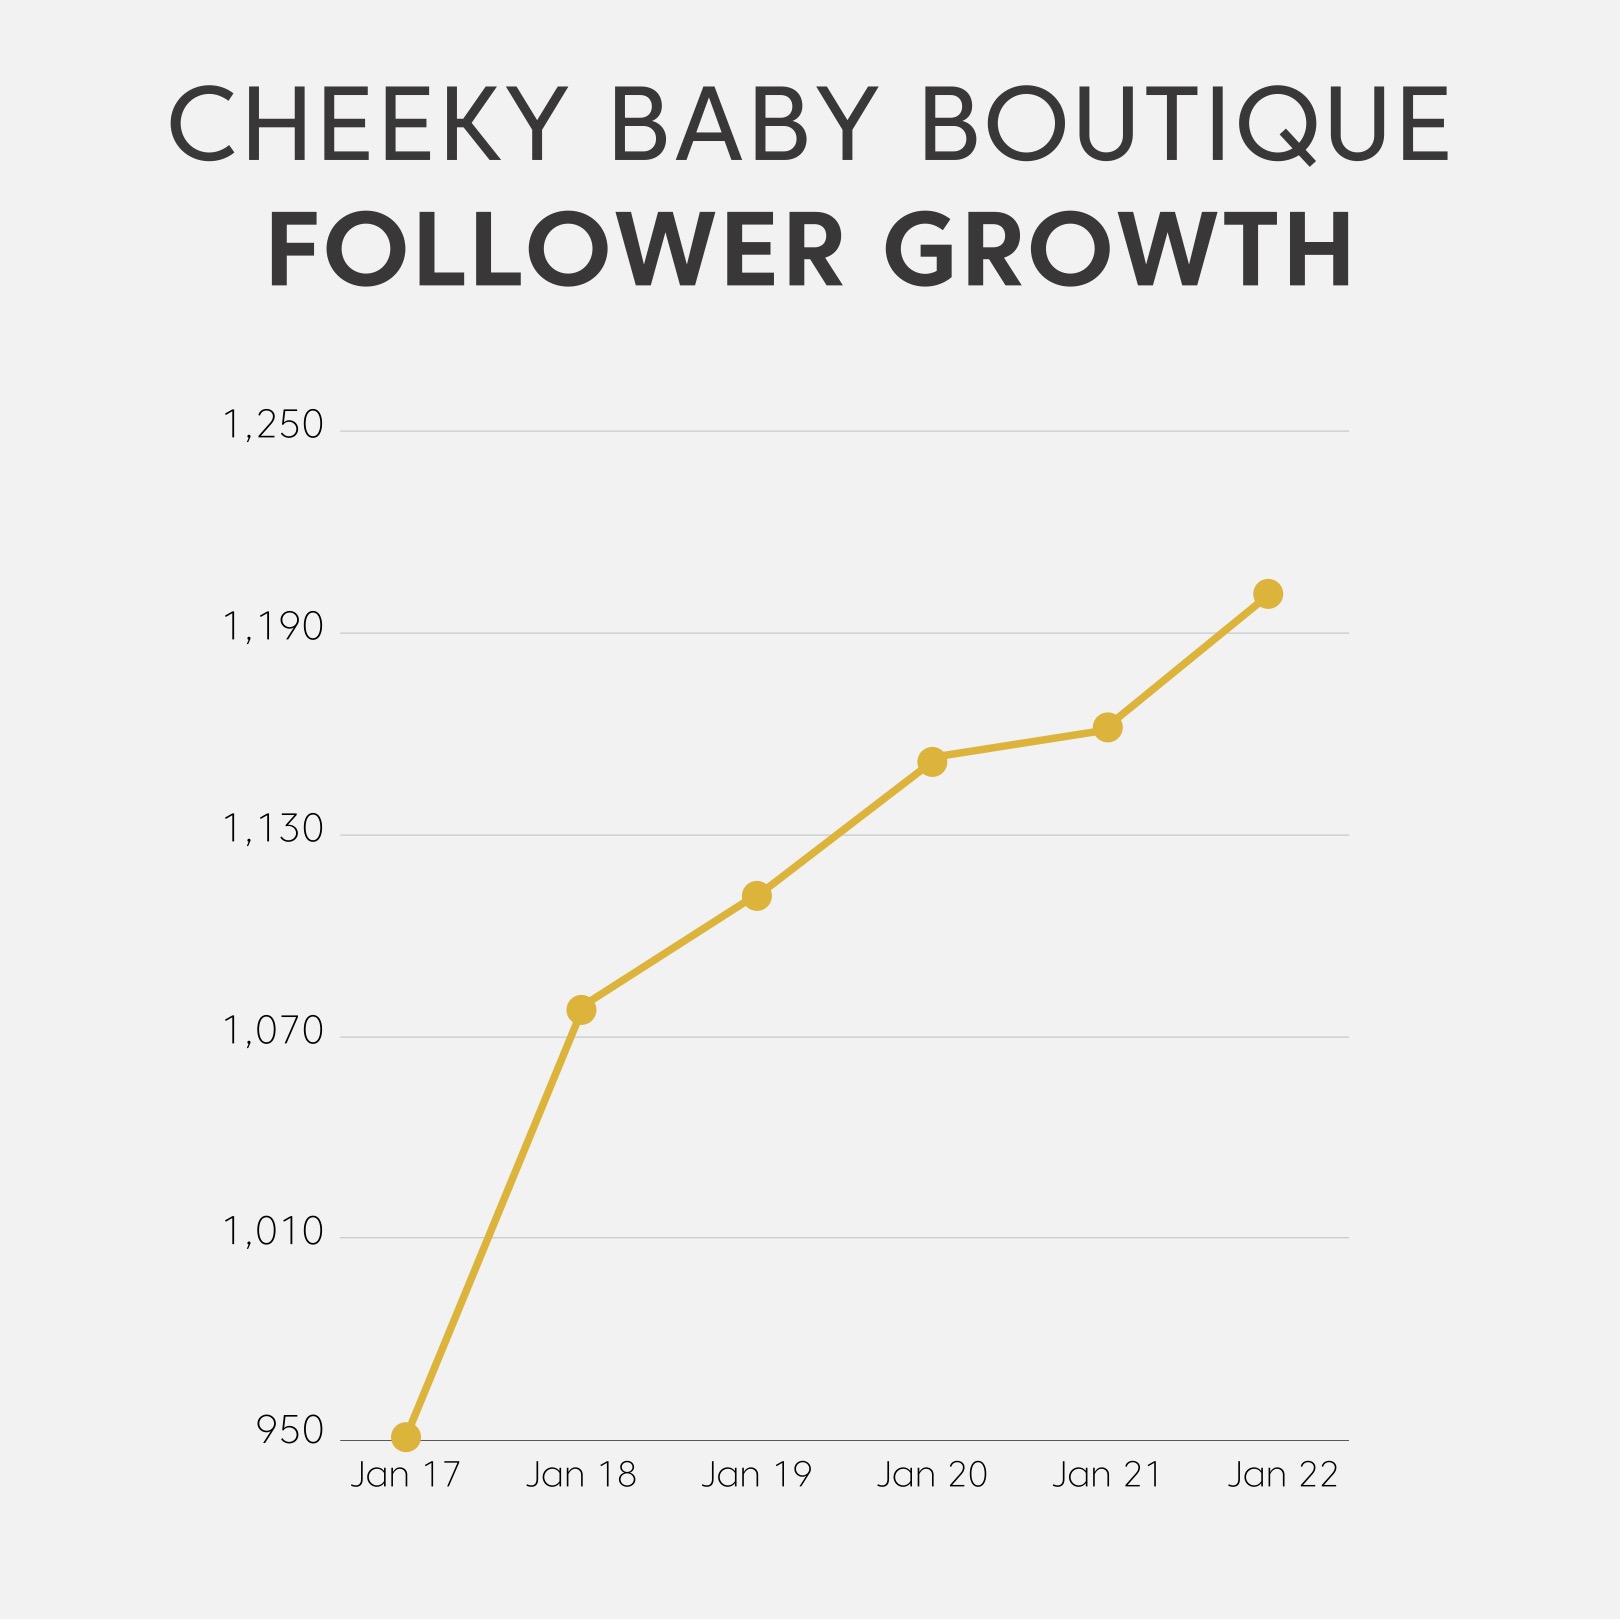 A graph showing follower growth